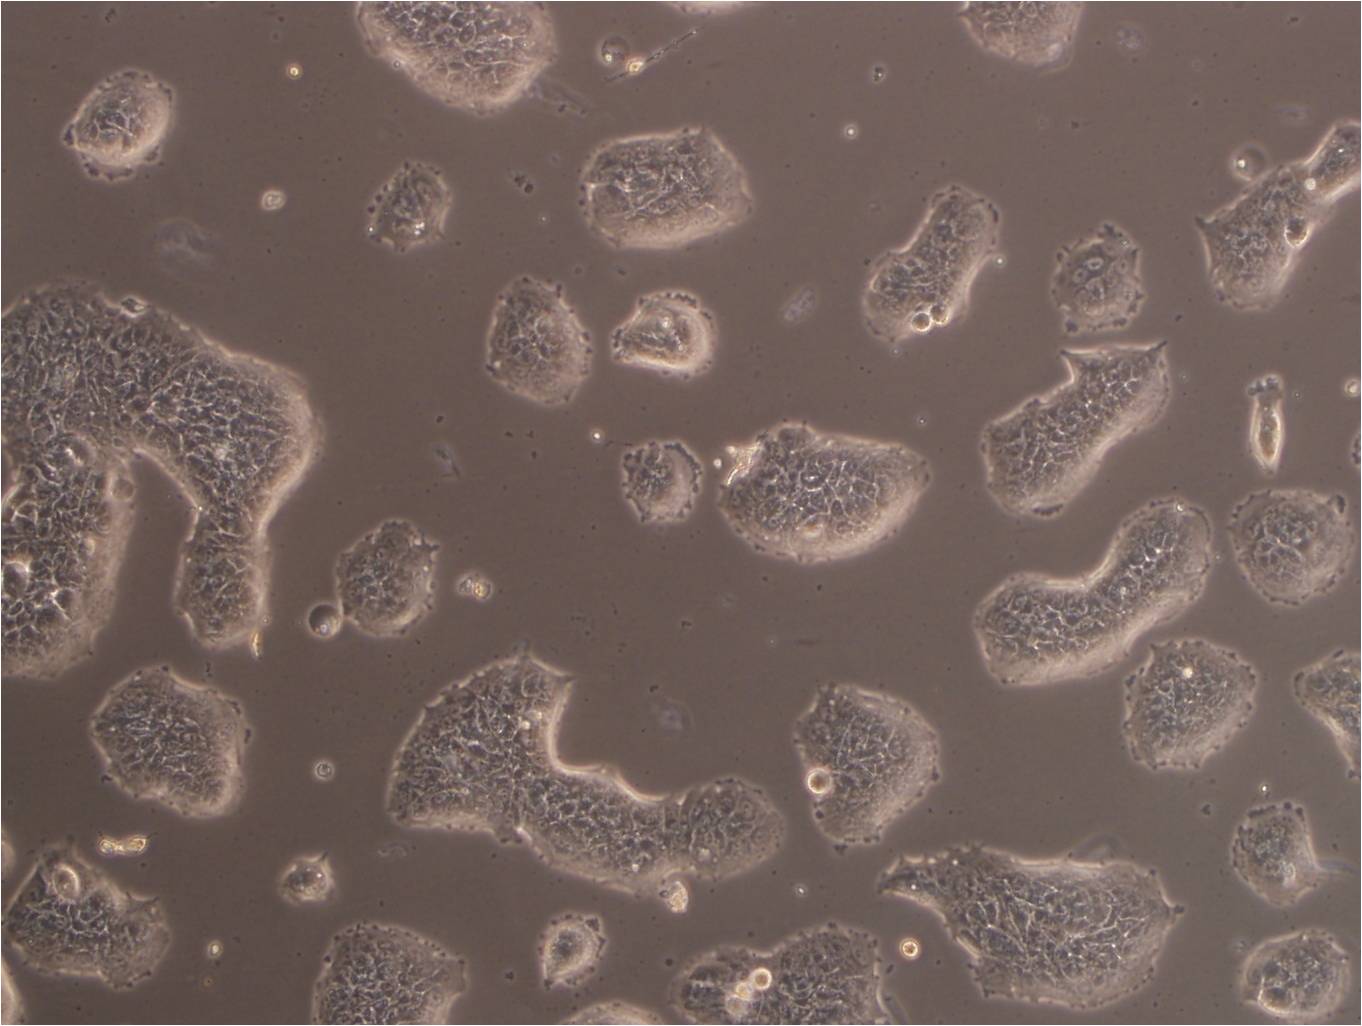 HONE-1 epithelioid cells人鼻咽癌细胞系,HONE-1 epithelioid cells